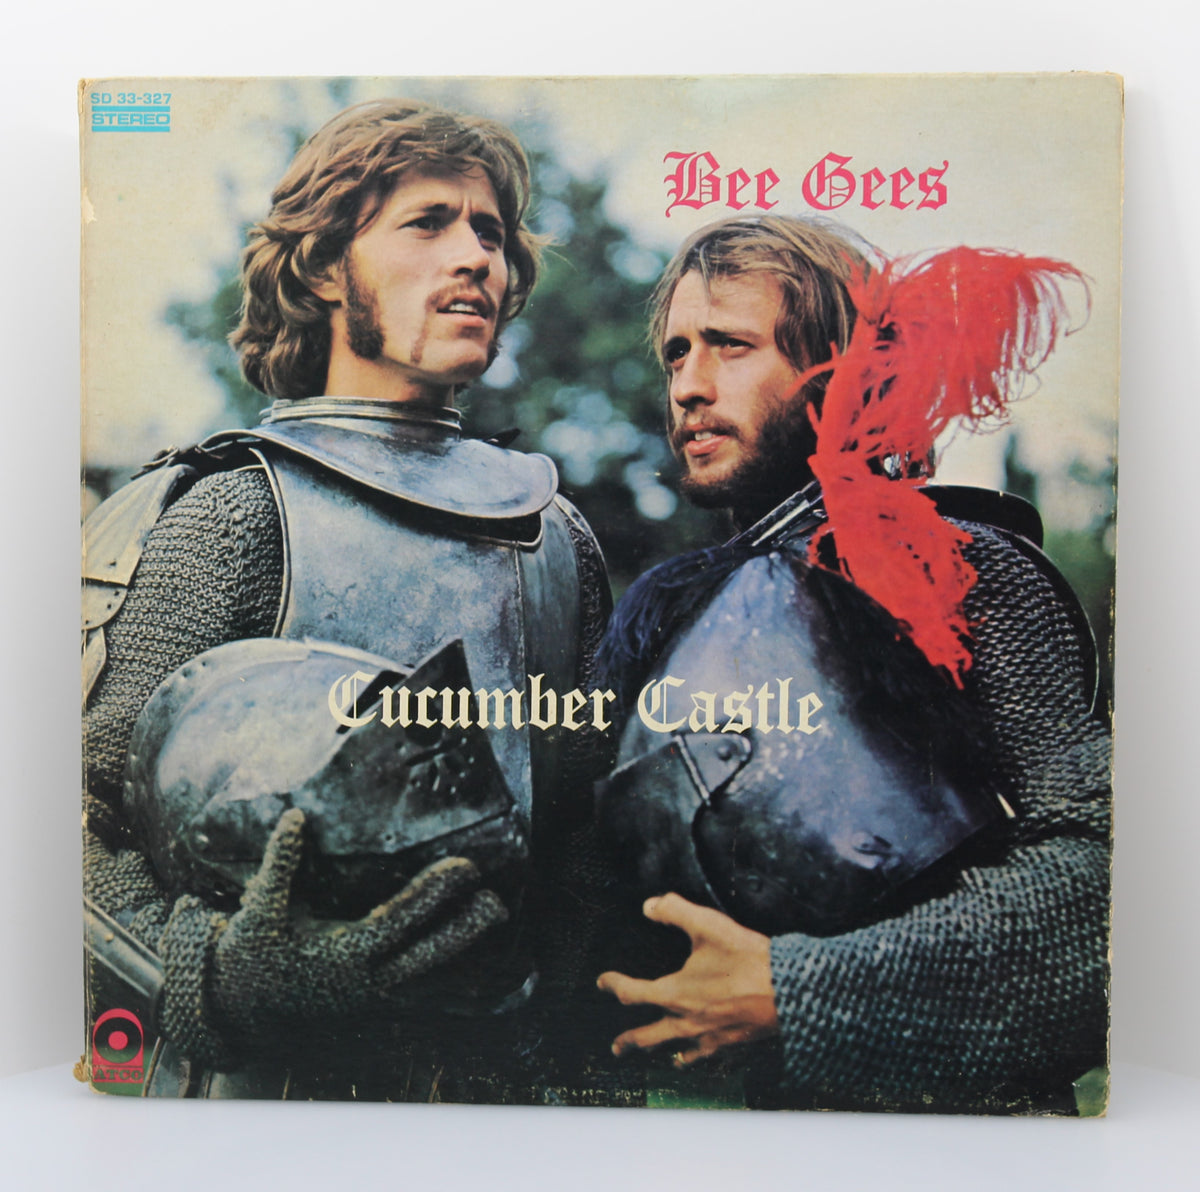 Bee Gees - Cucumber Castle, Vinyl 33Rpm, Album, LP, Stereo, Gatefold, Canada 1970